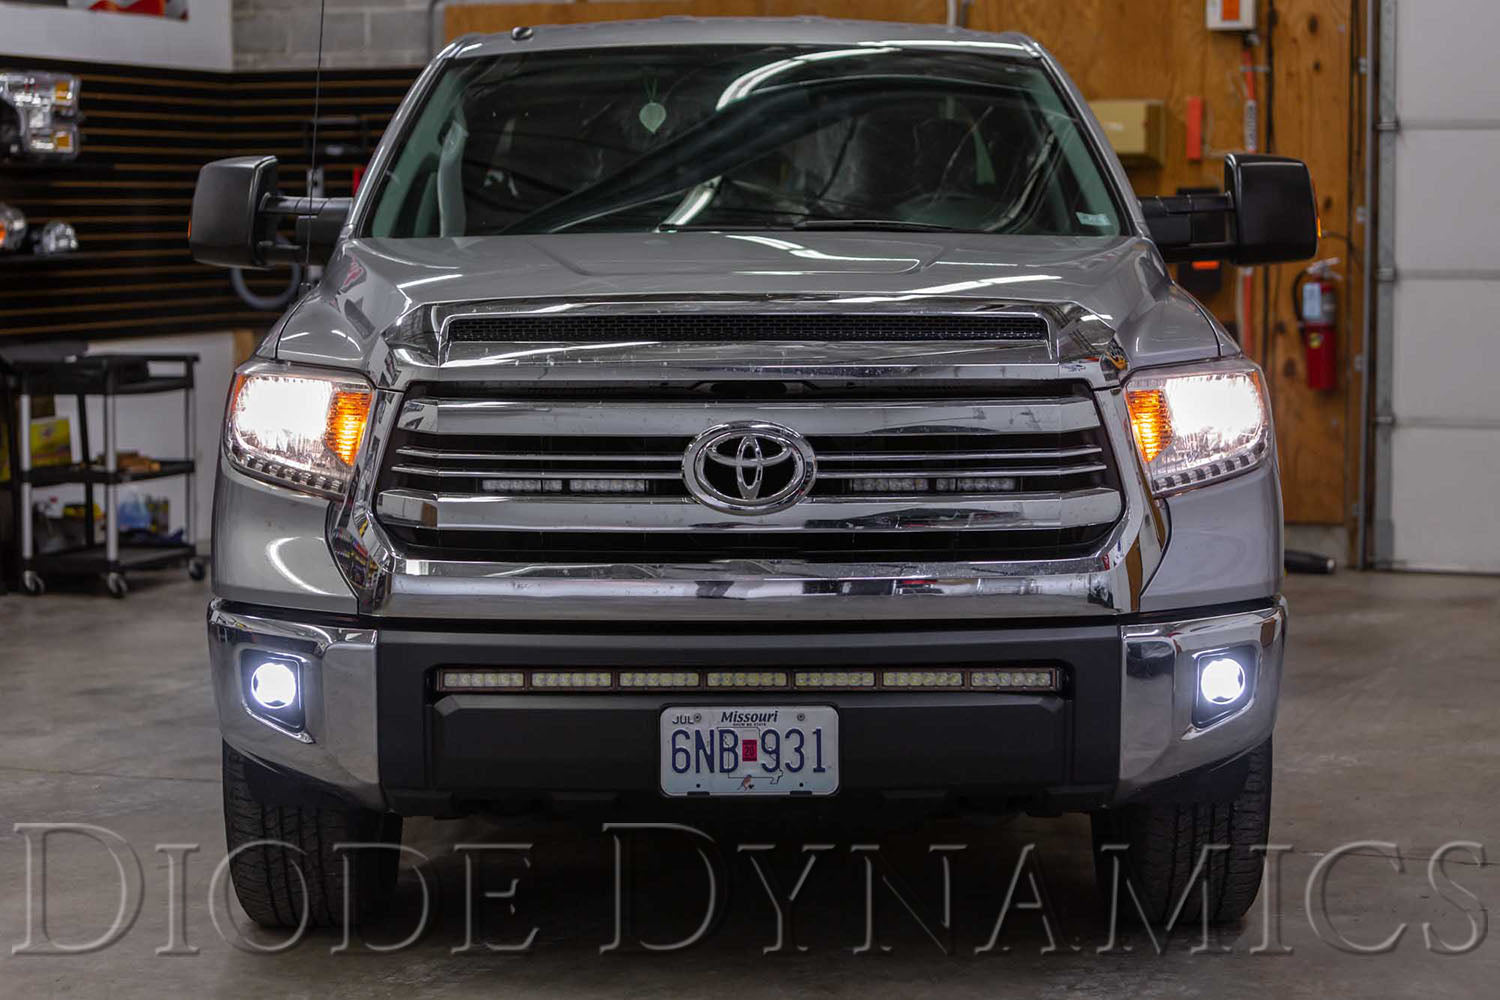 SS3 LED Fog Light Kit for 2014-2021 Toyota Tundra White SAE/DOT Driving Pro w/ Backlight Diode Dynamics